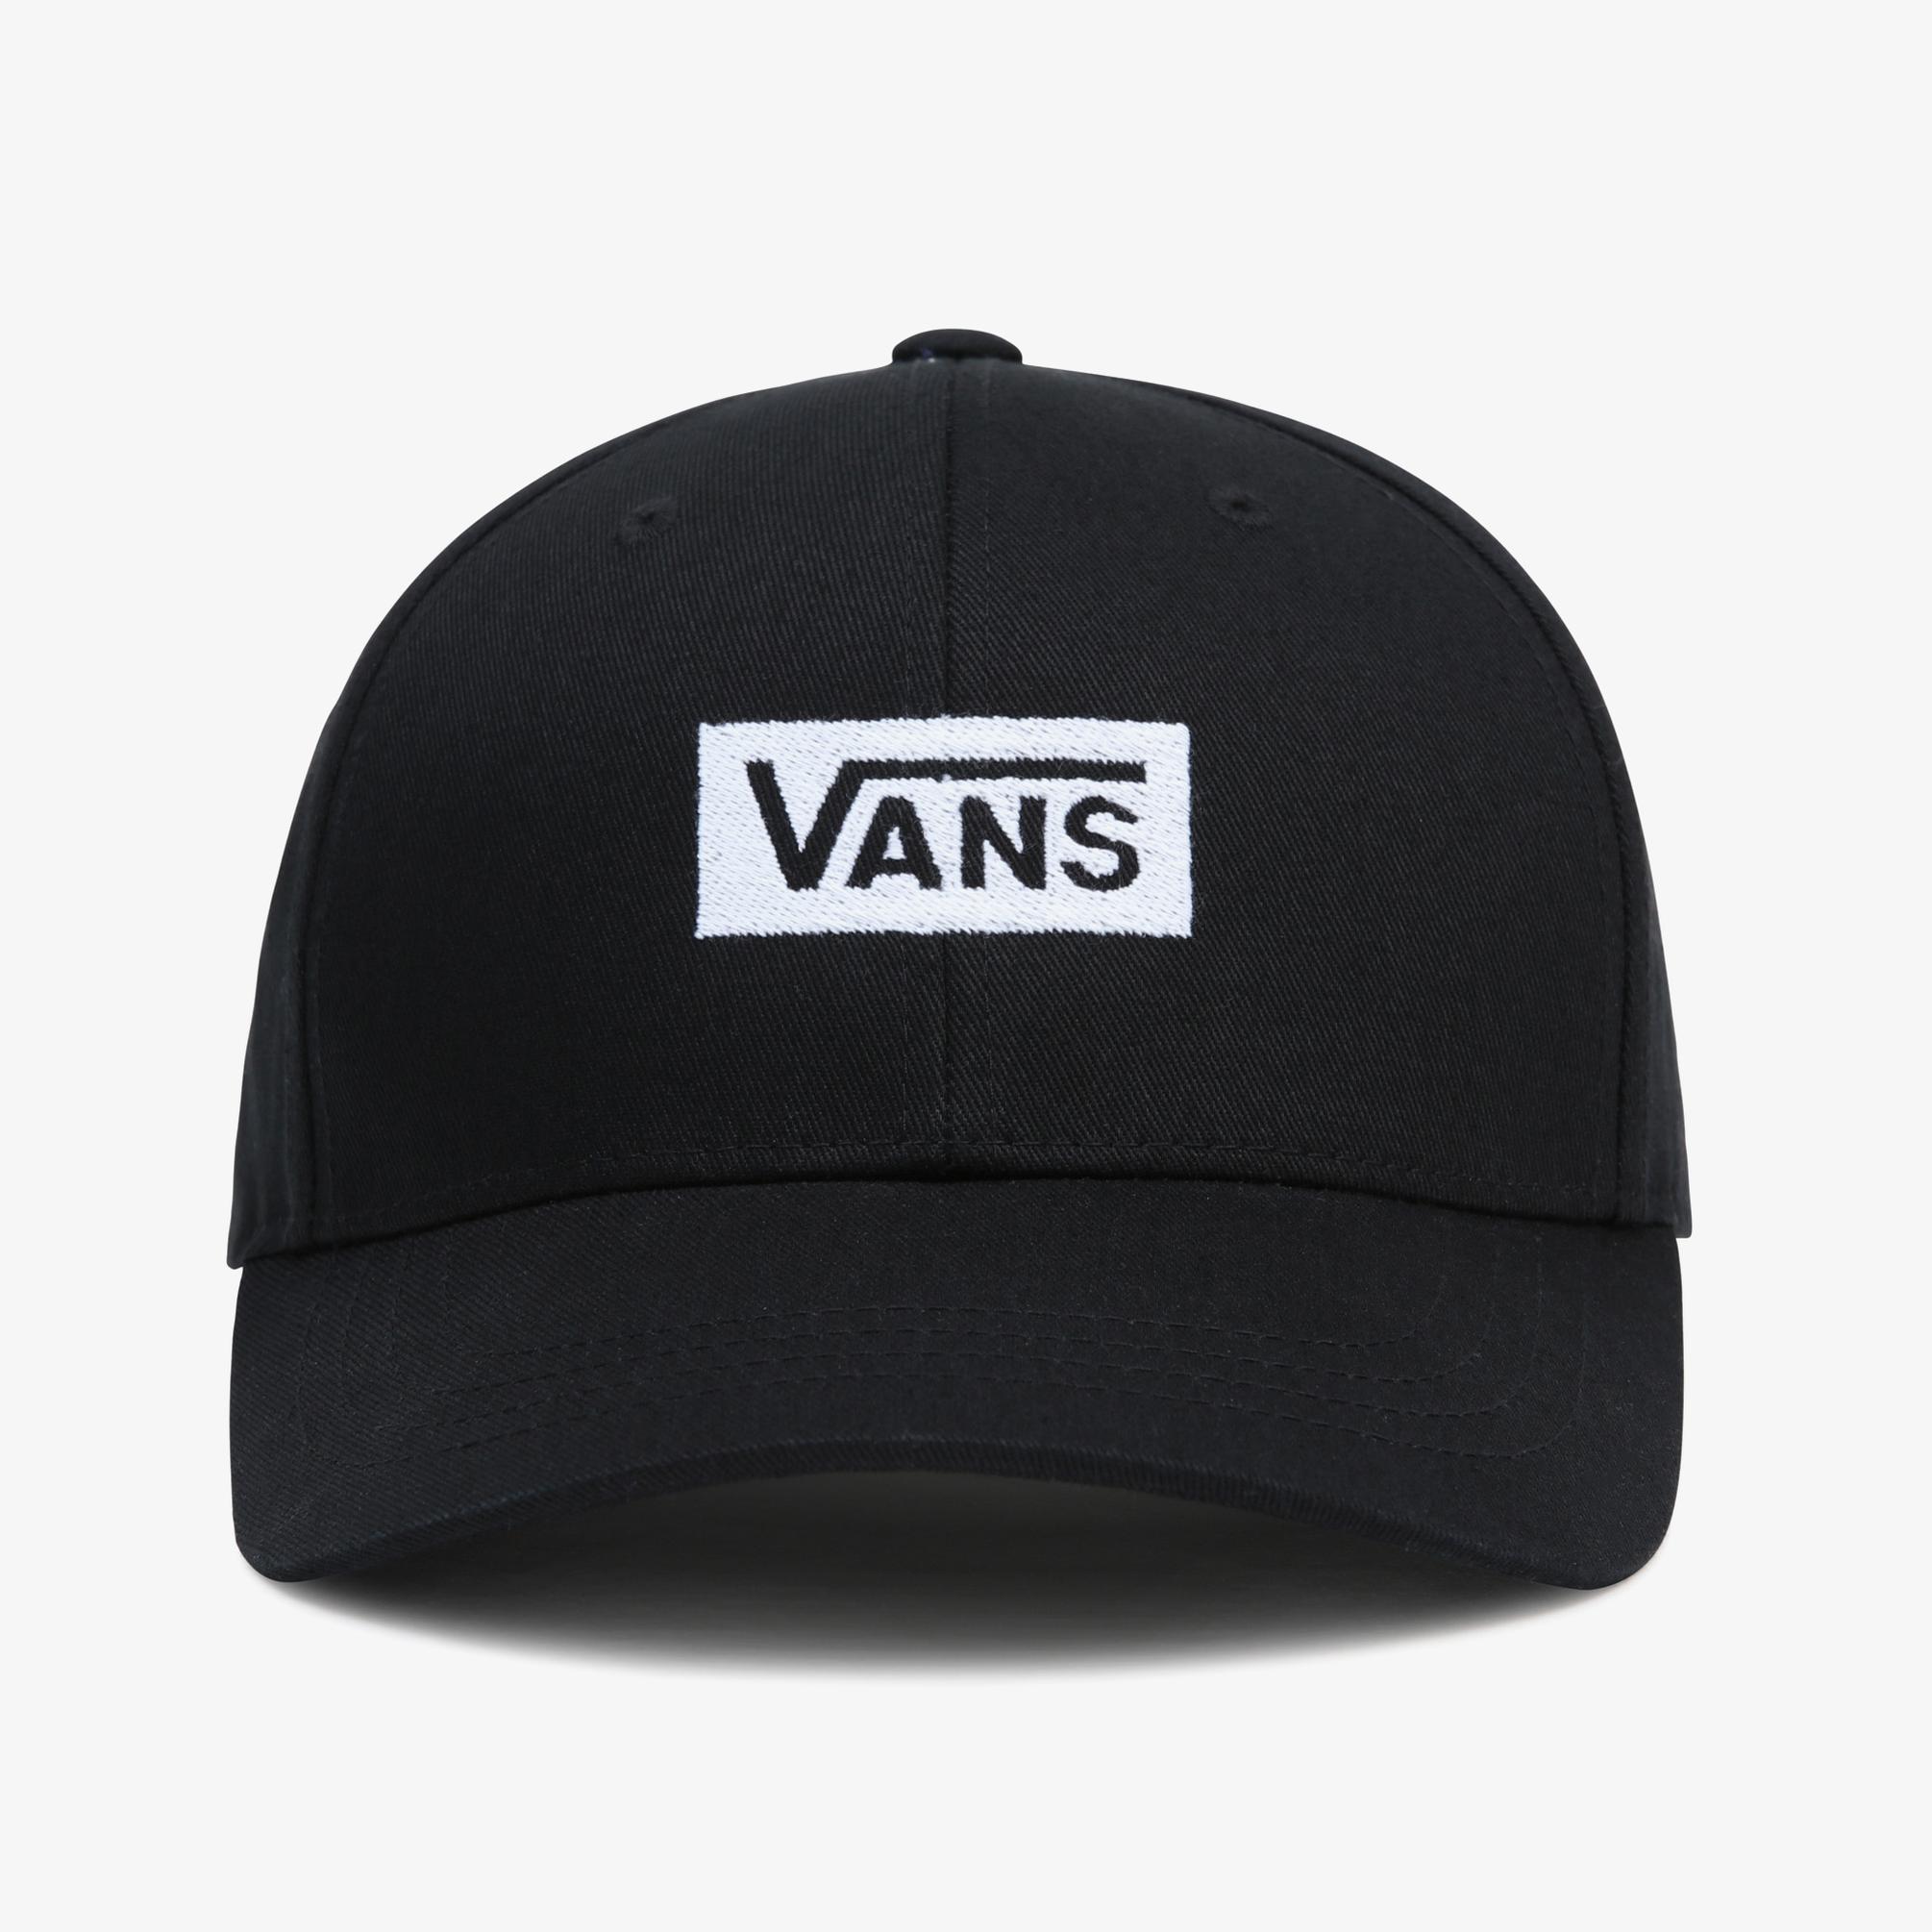  Vans Boxed Structured Jockey Erkek Siyah Şapka